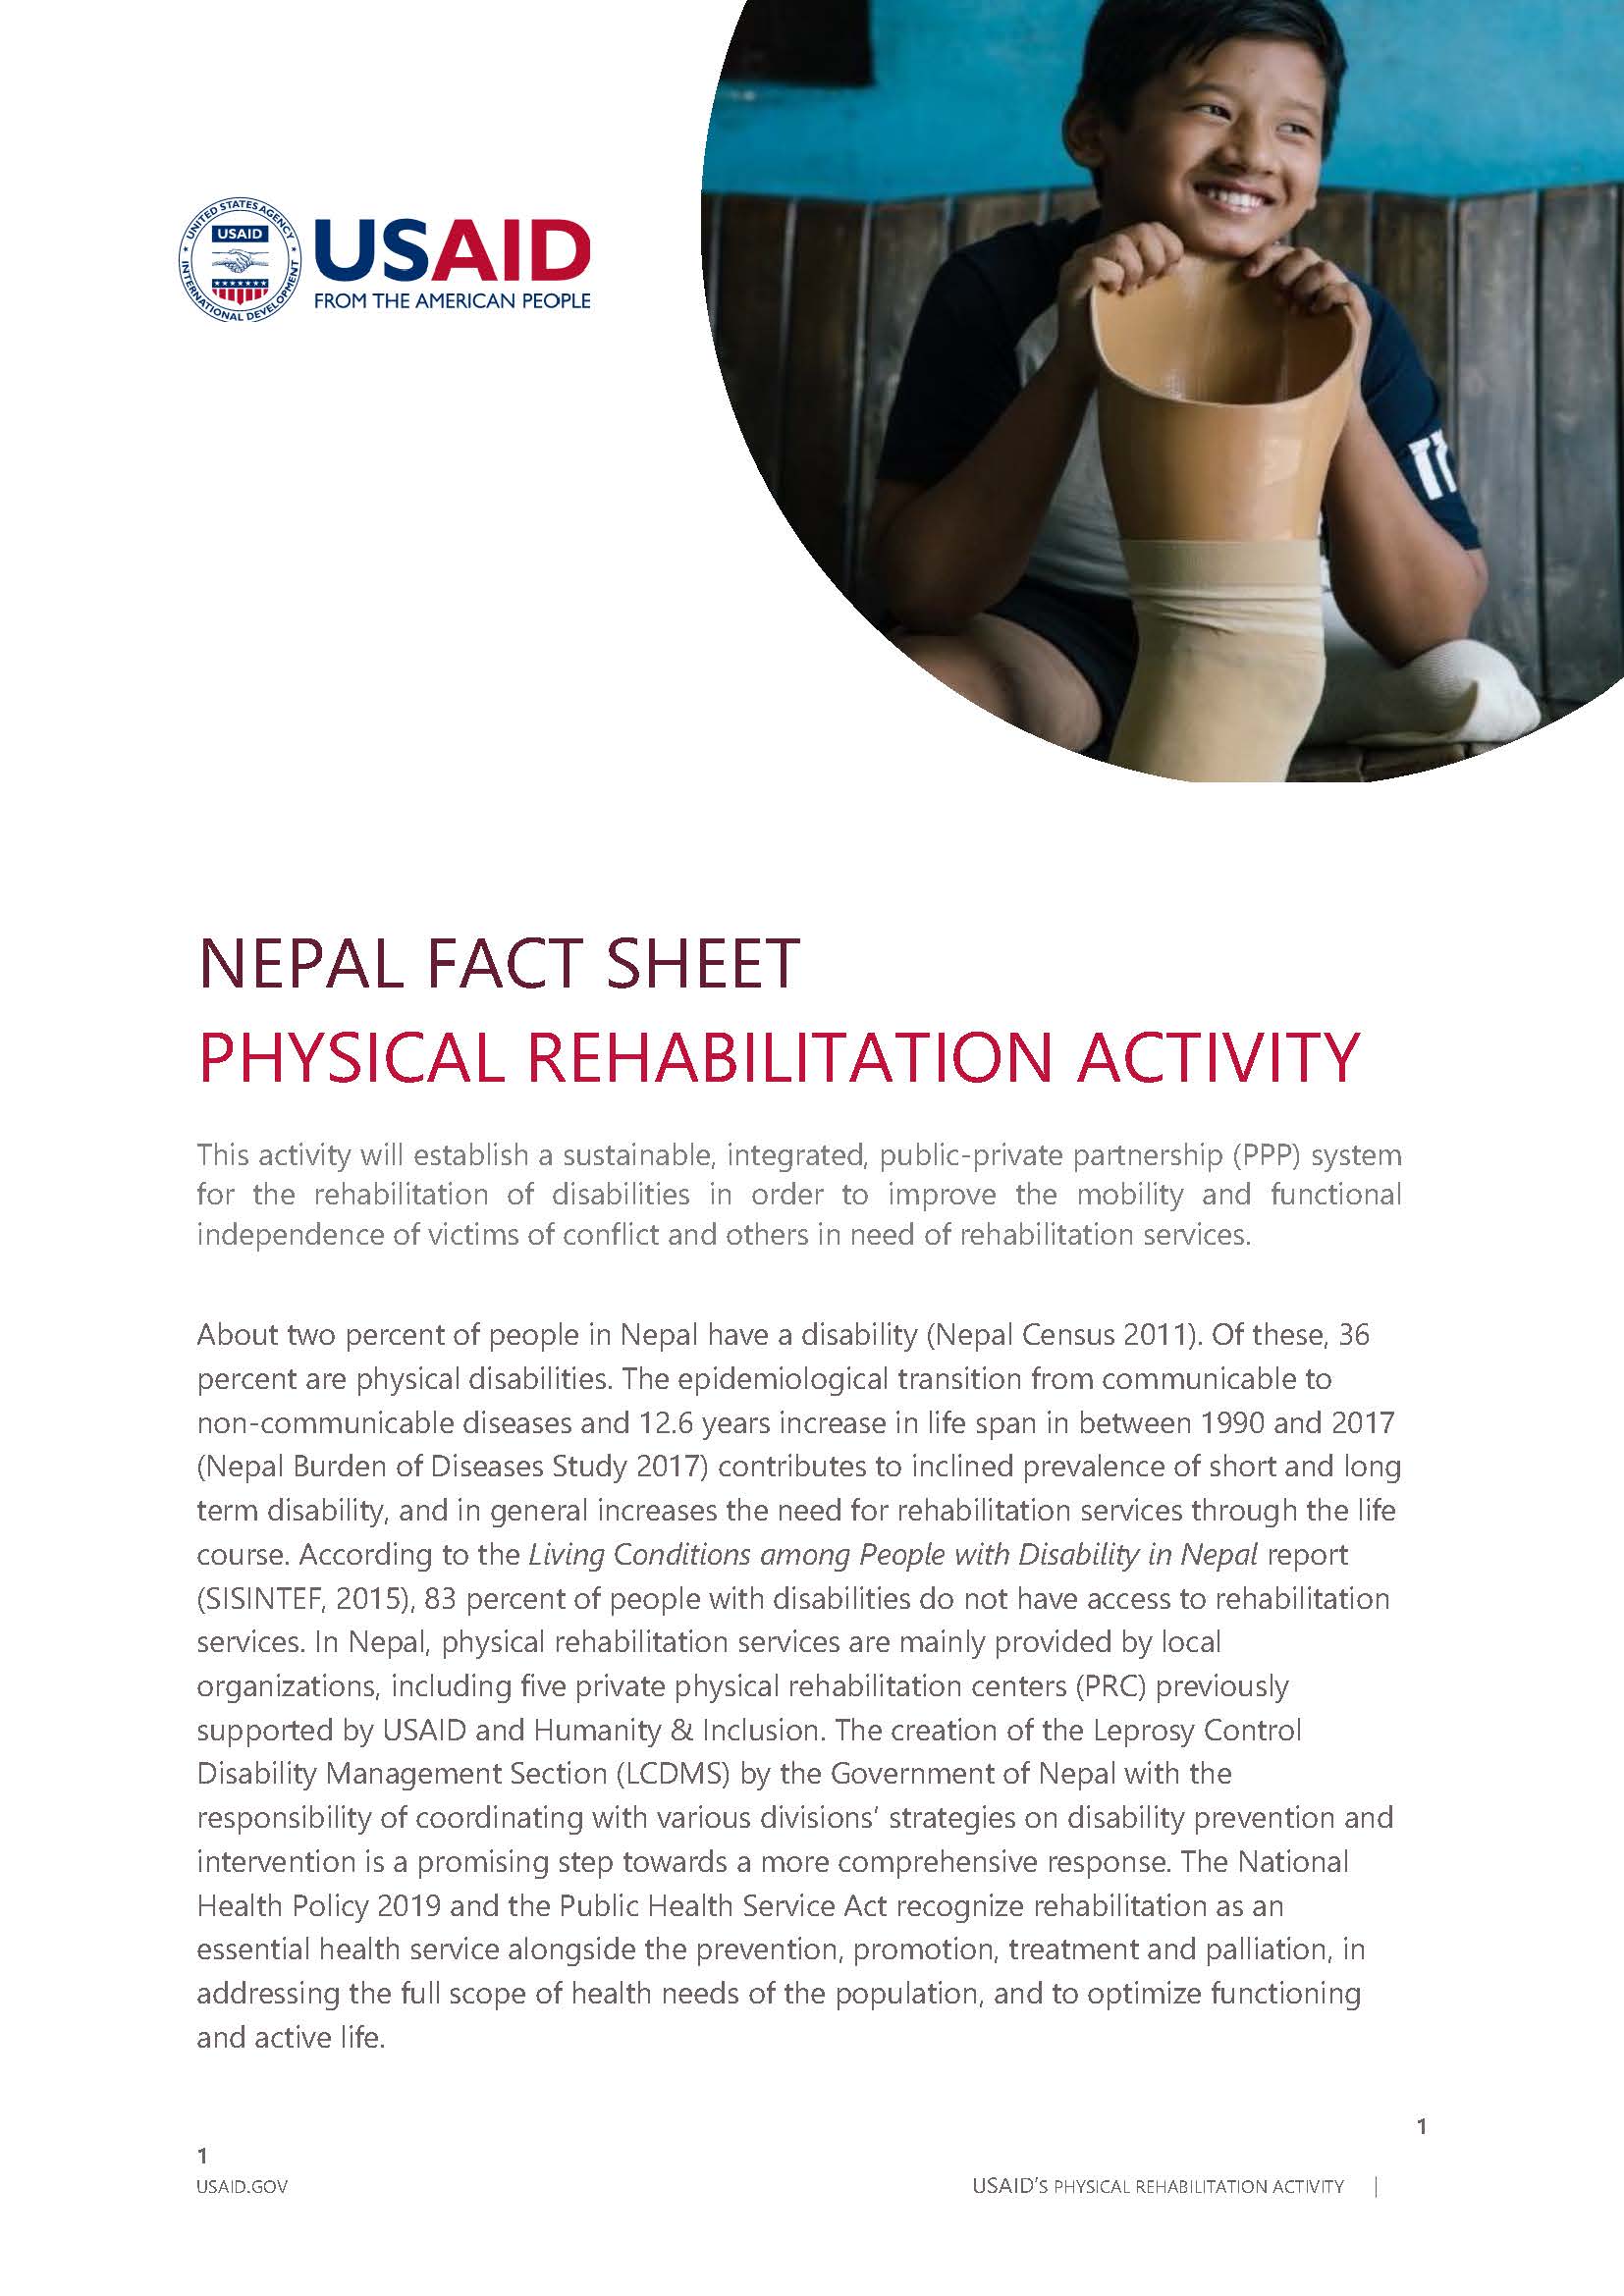 Fact Sheet: PHYSICAL REHABILITATION ACTIVITY